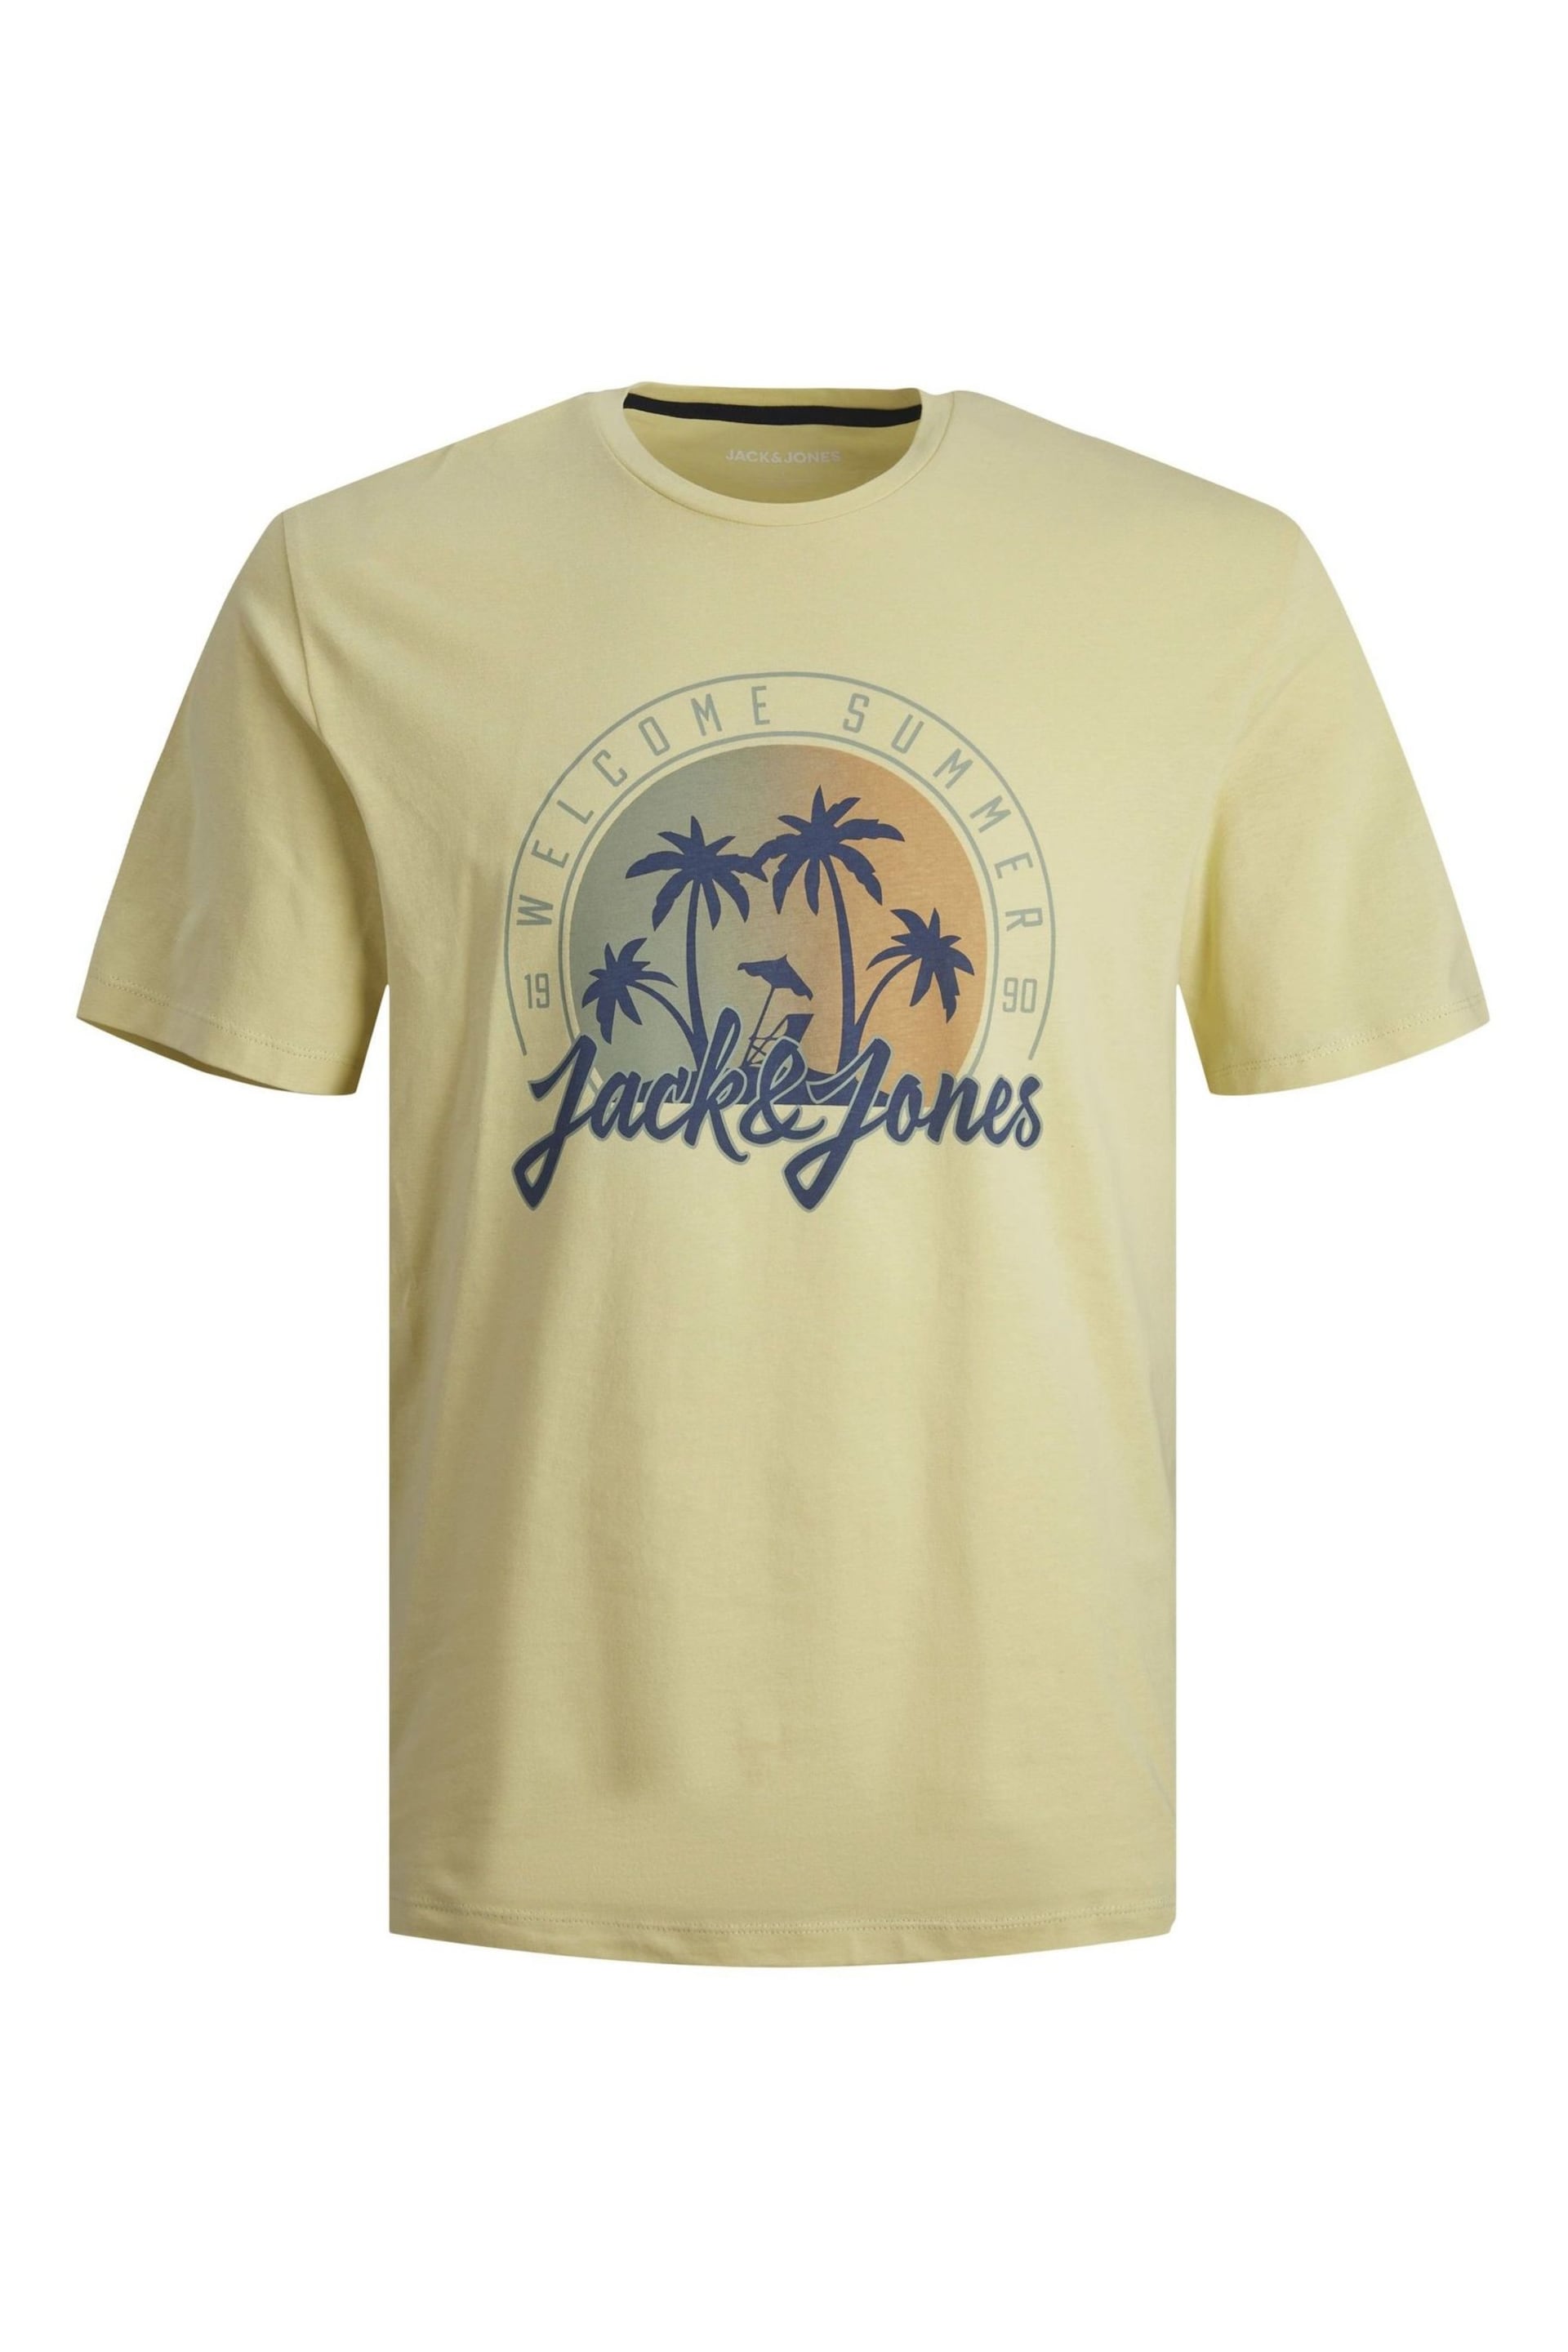 JACK & JONES Grey Short Sleeve Crew Neck Printed T-Shirt 3 Pack - Image 3 of 4